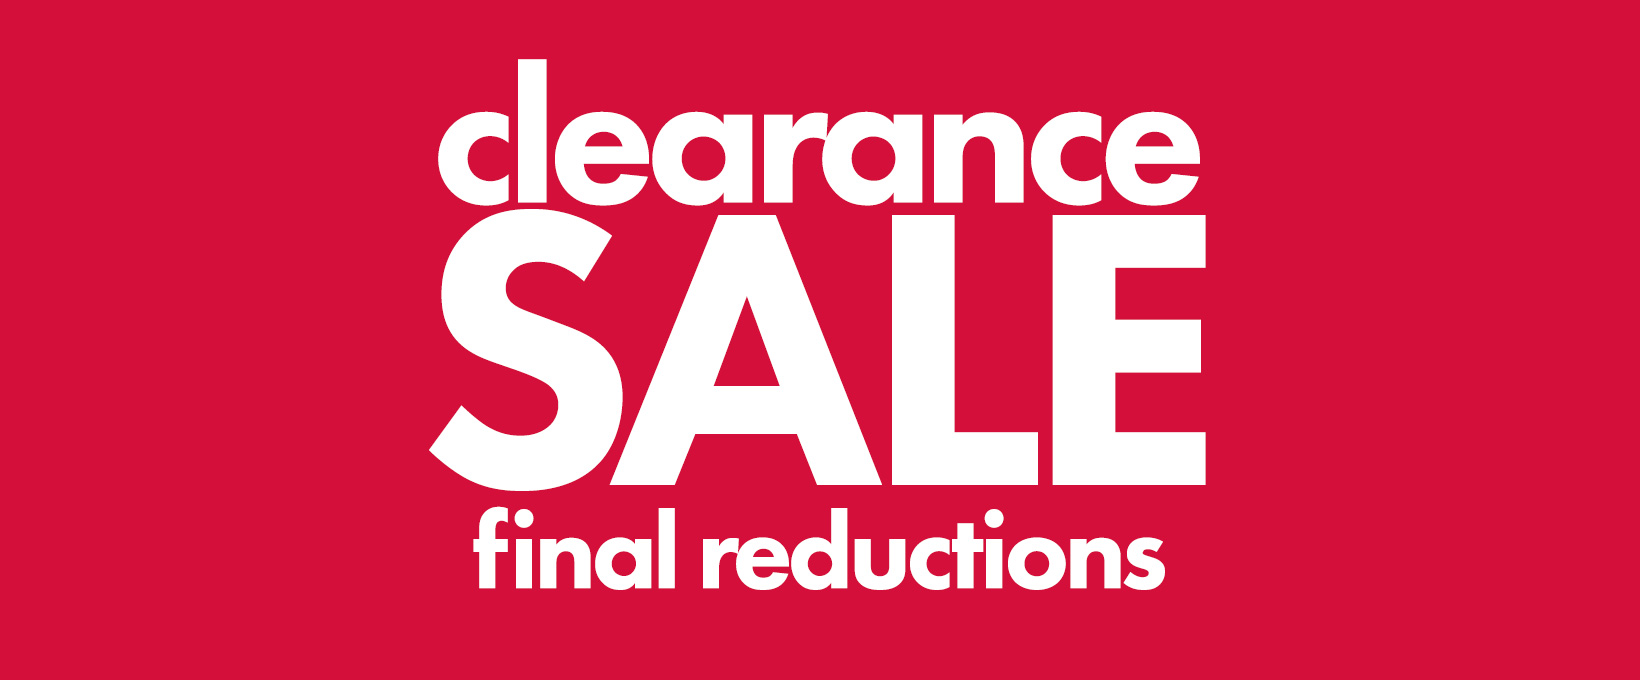 Final Winter Clearance Sale!